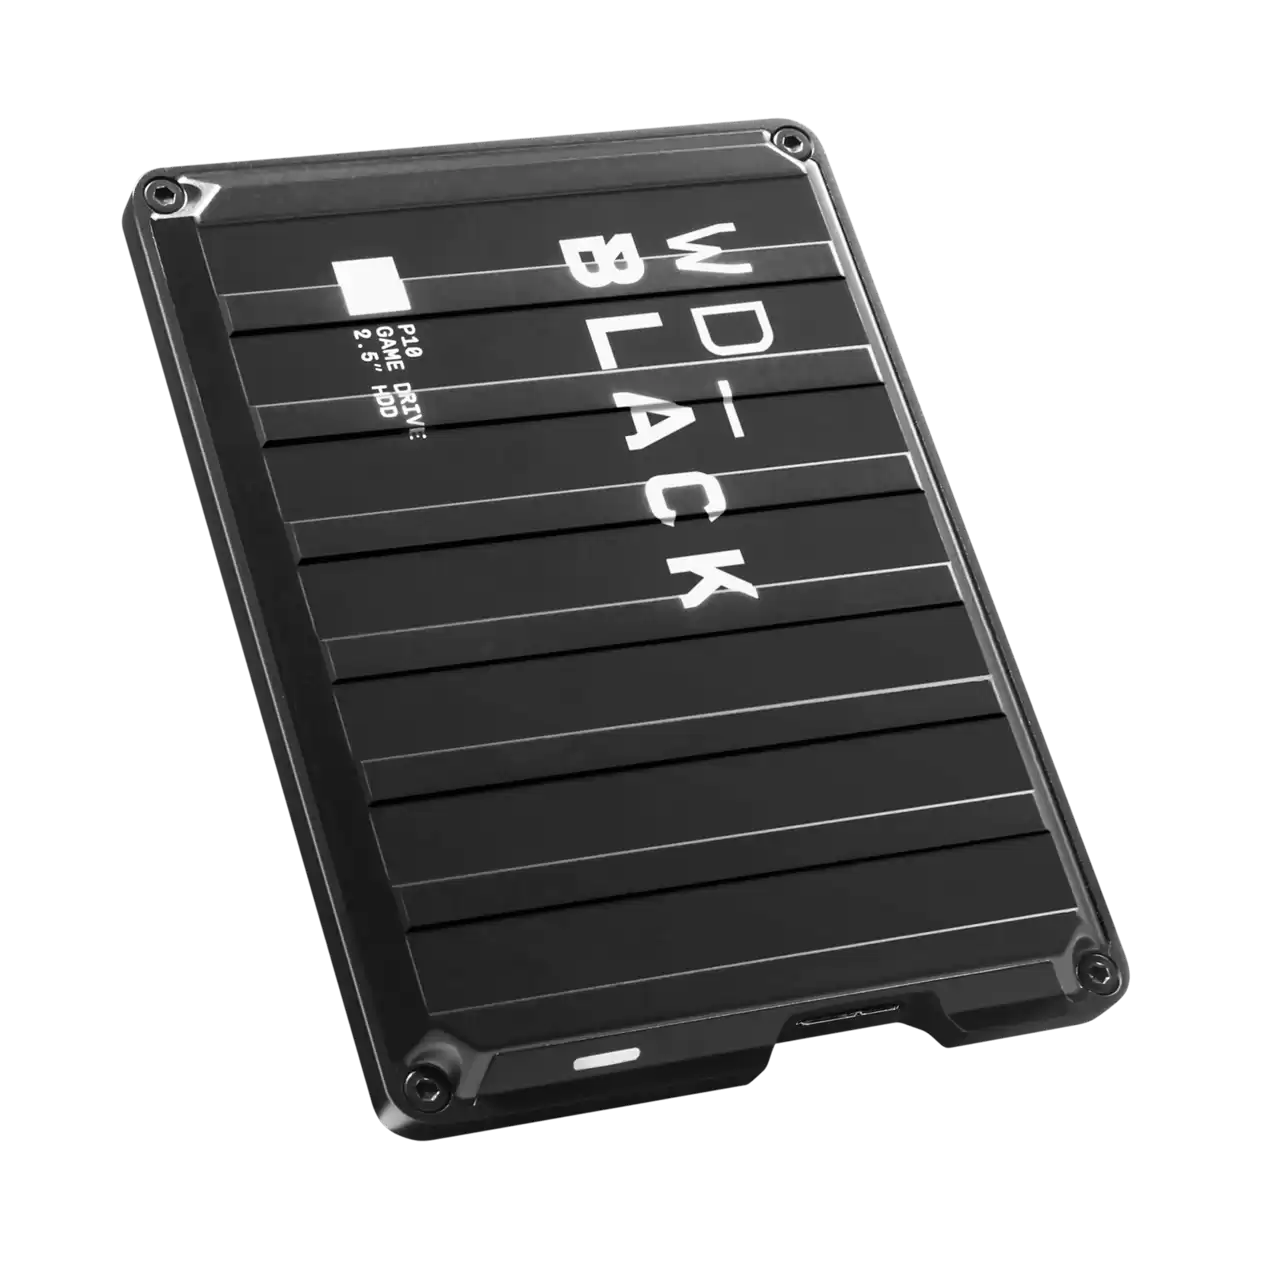 WD_Black P10 Game Drive 4TB 外置硬碟 WDBA3A0040BBK